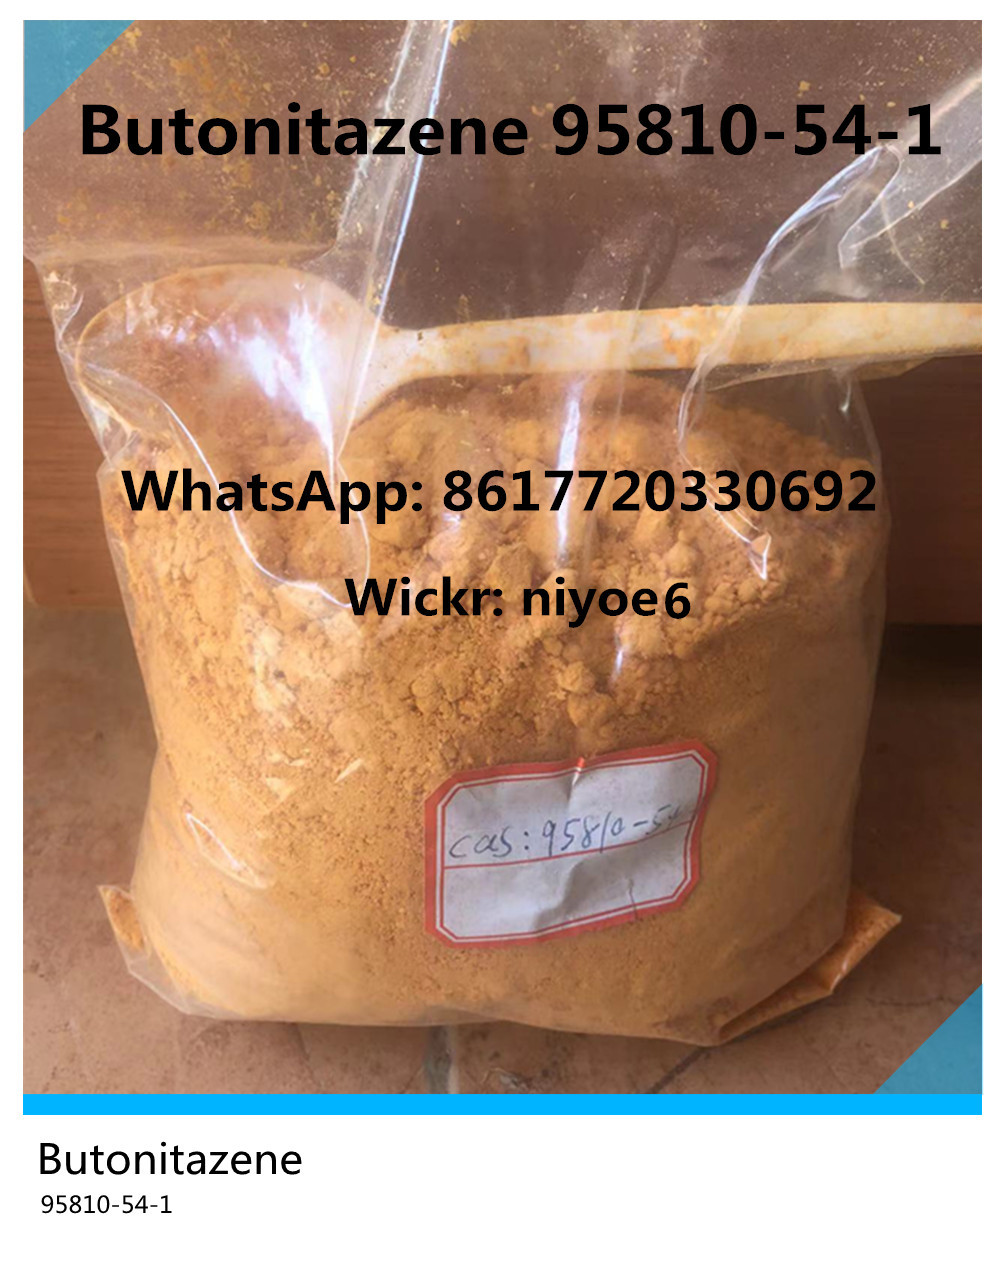 Supply 99% Opiate Butonitazene Powder CAS 95810-54-1 for Analgesia Wickr: niyoe6